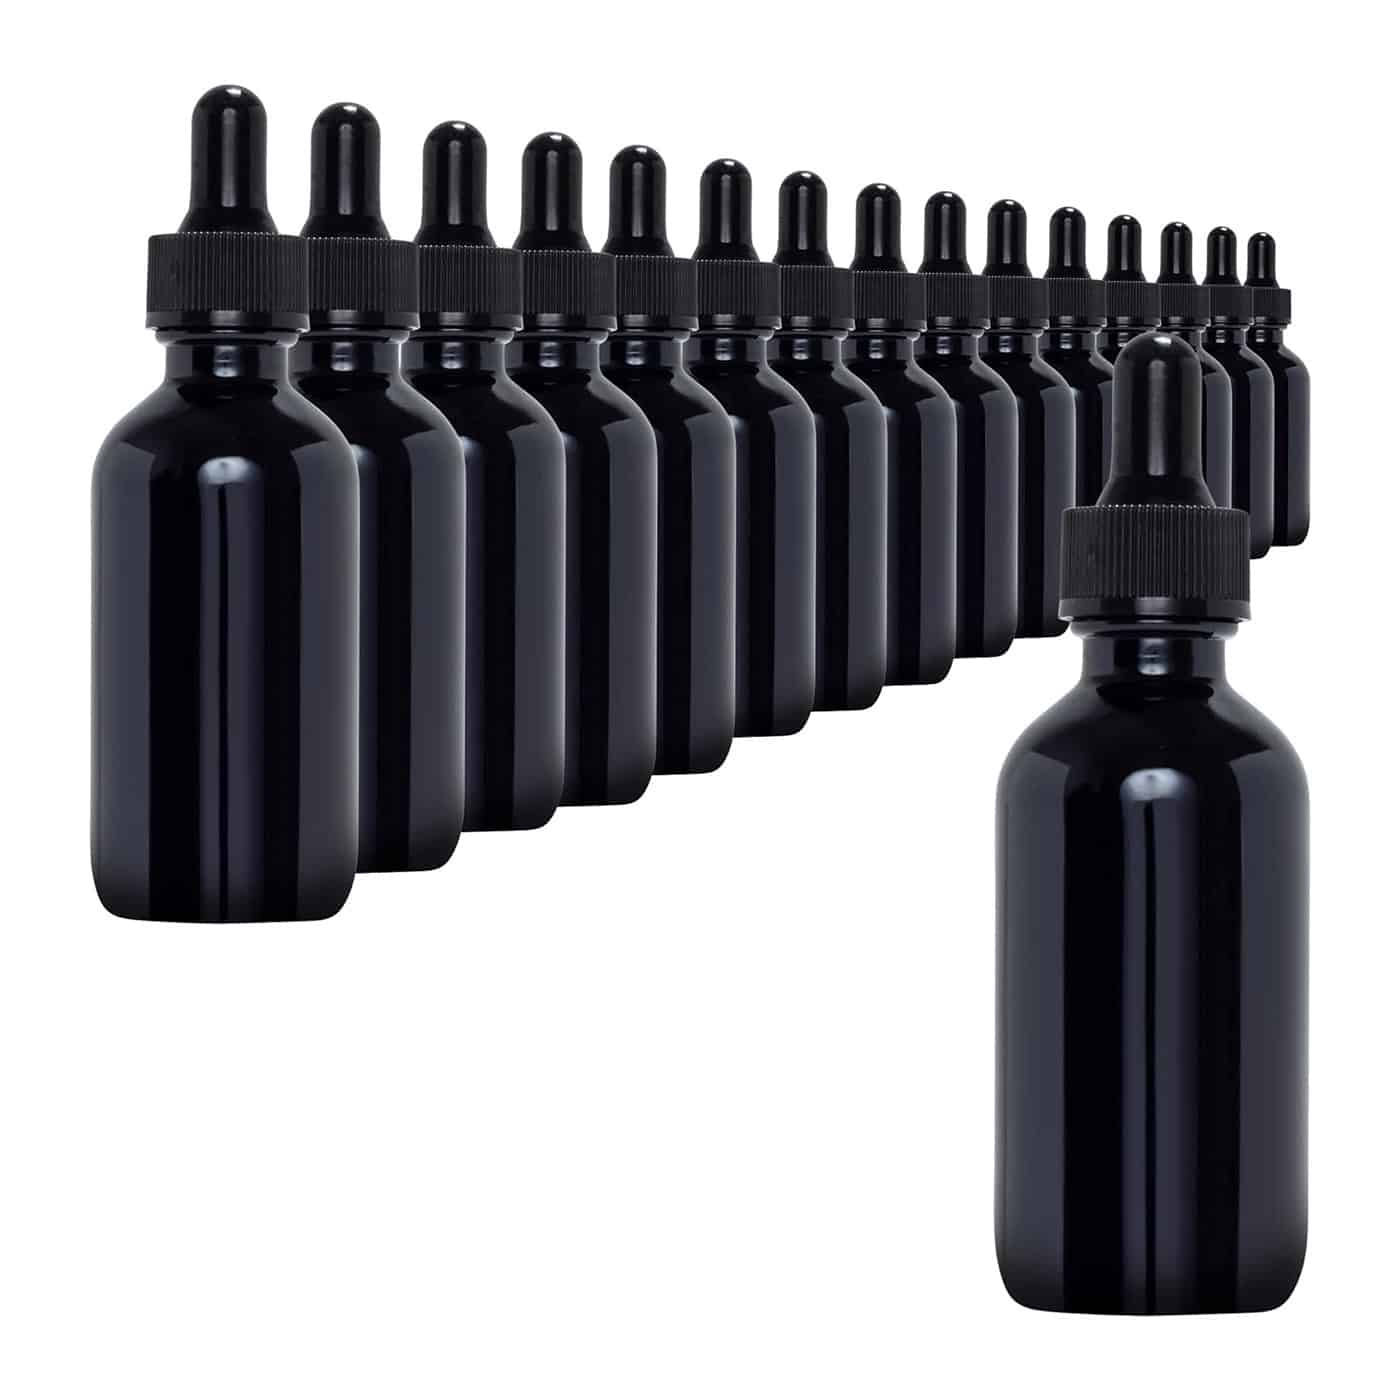 UV-resistant Brilliant Black 2-ounce Boston Round Tincture Bottles